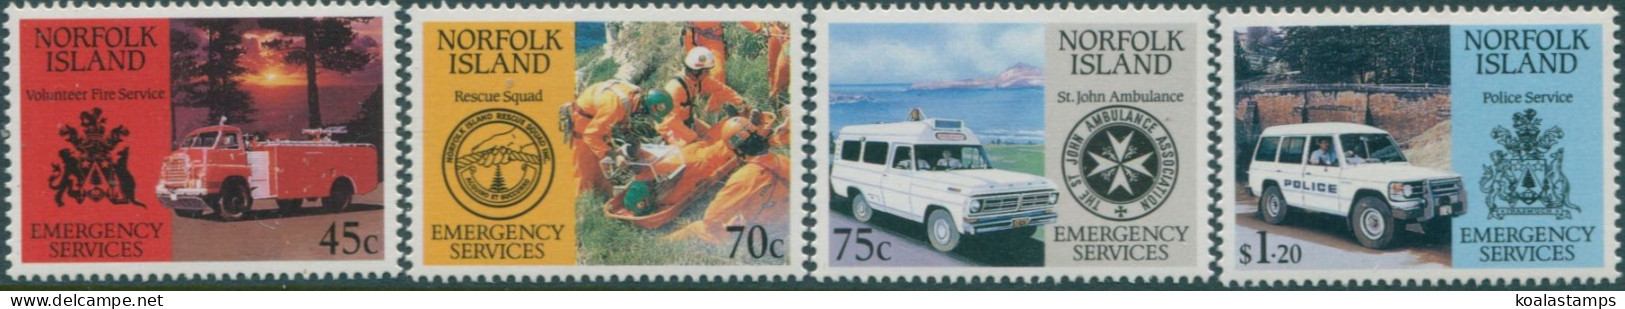 Norfolk Island 1993 SG546-549 Emergency Services Set MNH - Norfolk Island